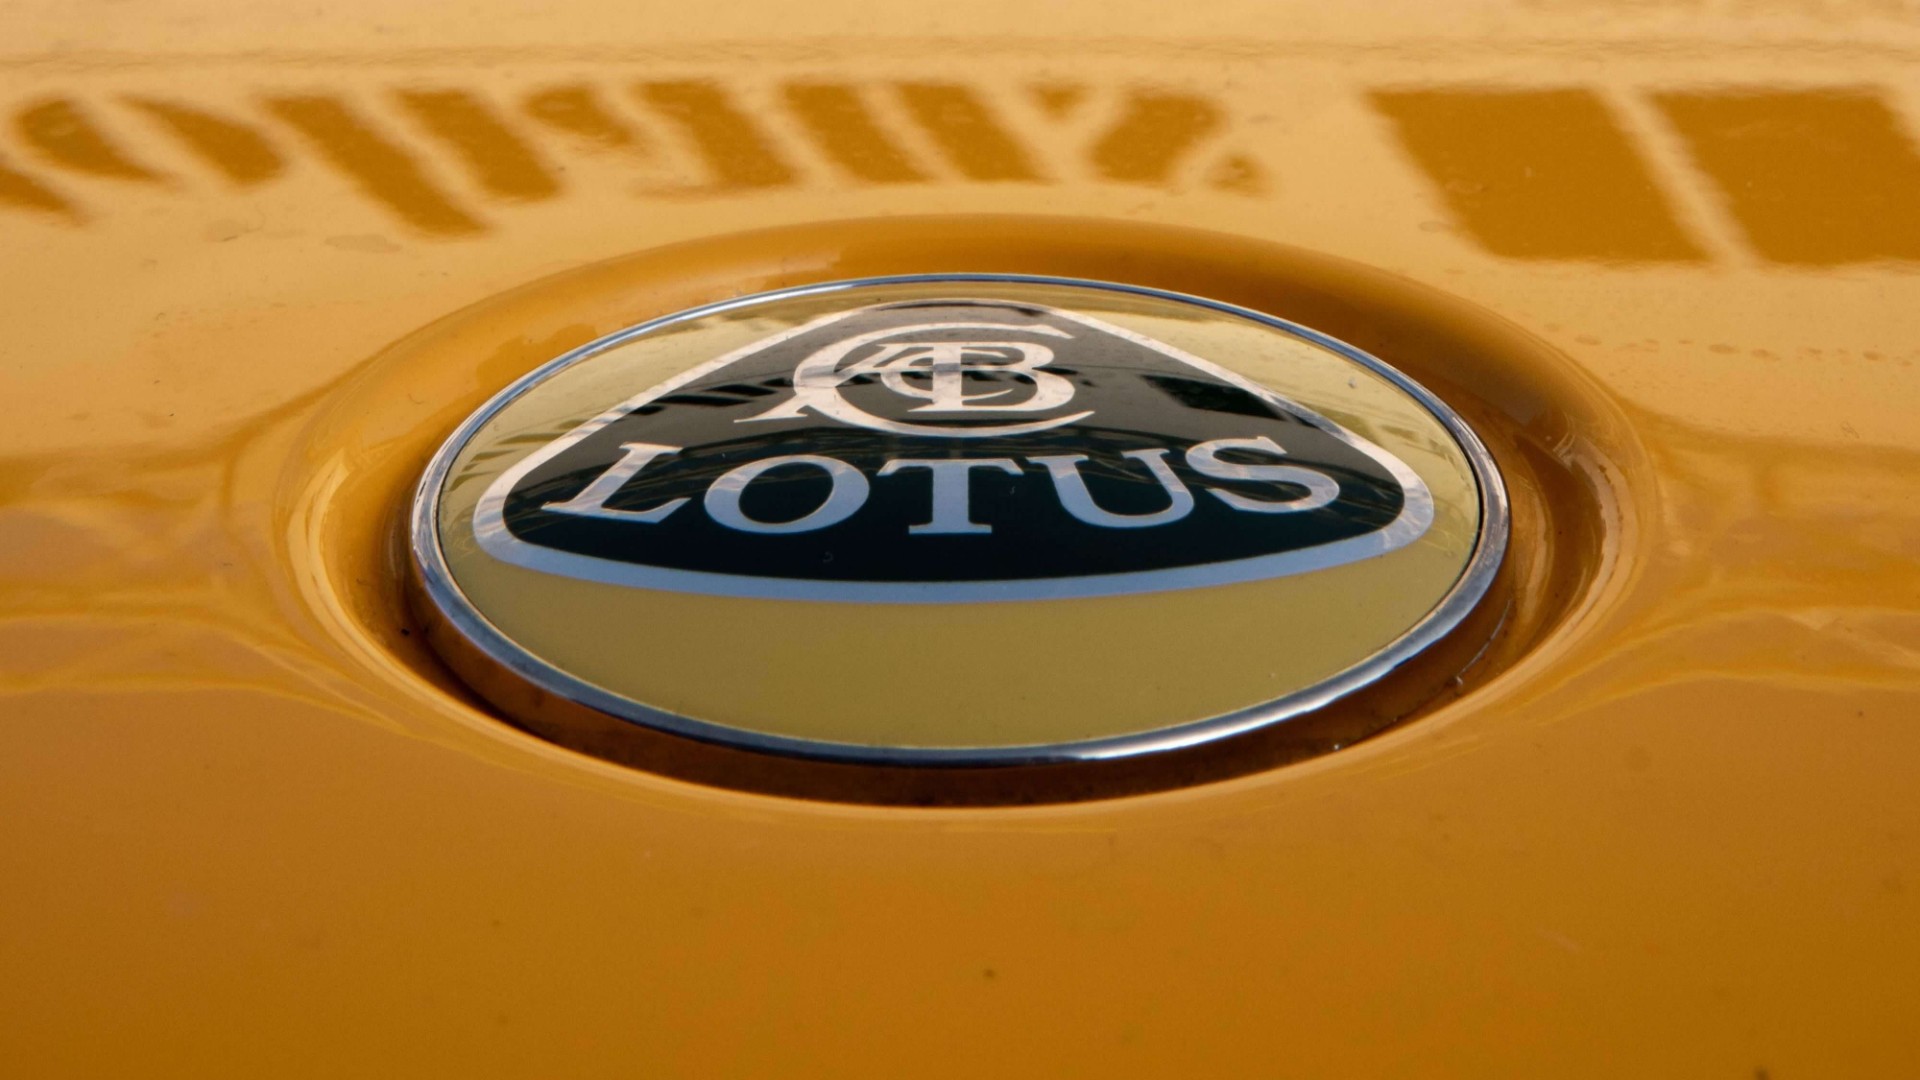 Lotus 3-Eleven (Road) Car Insurance Header Image